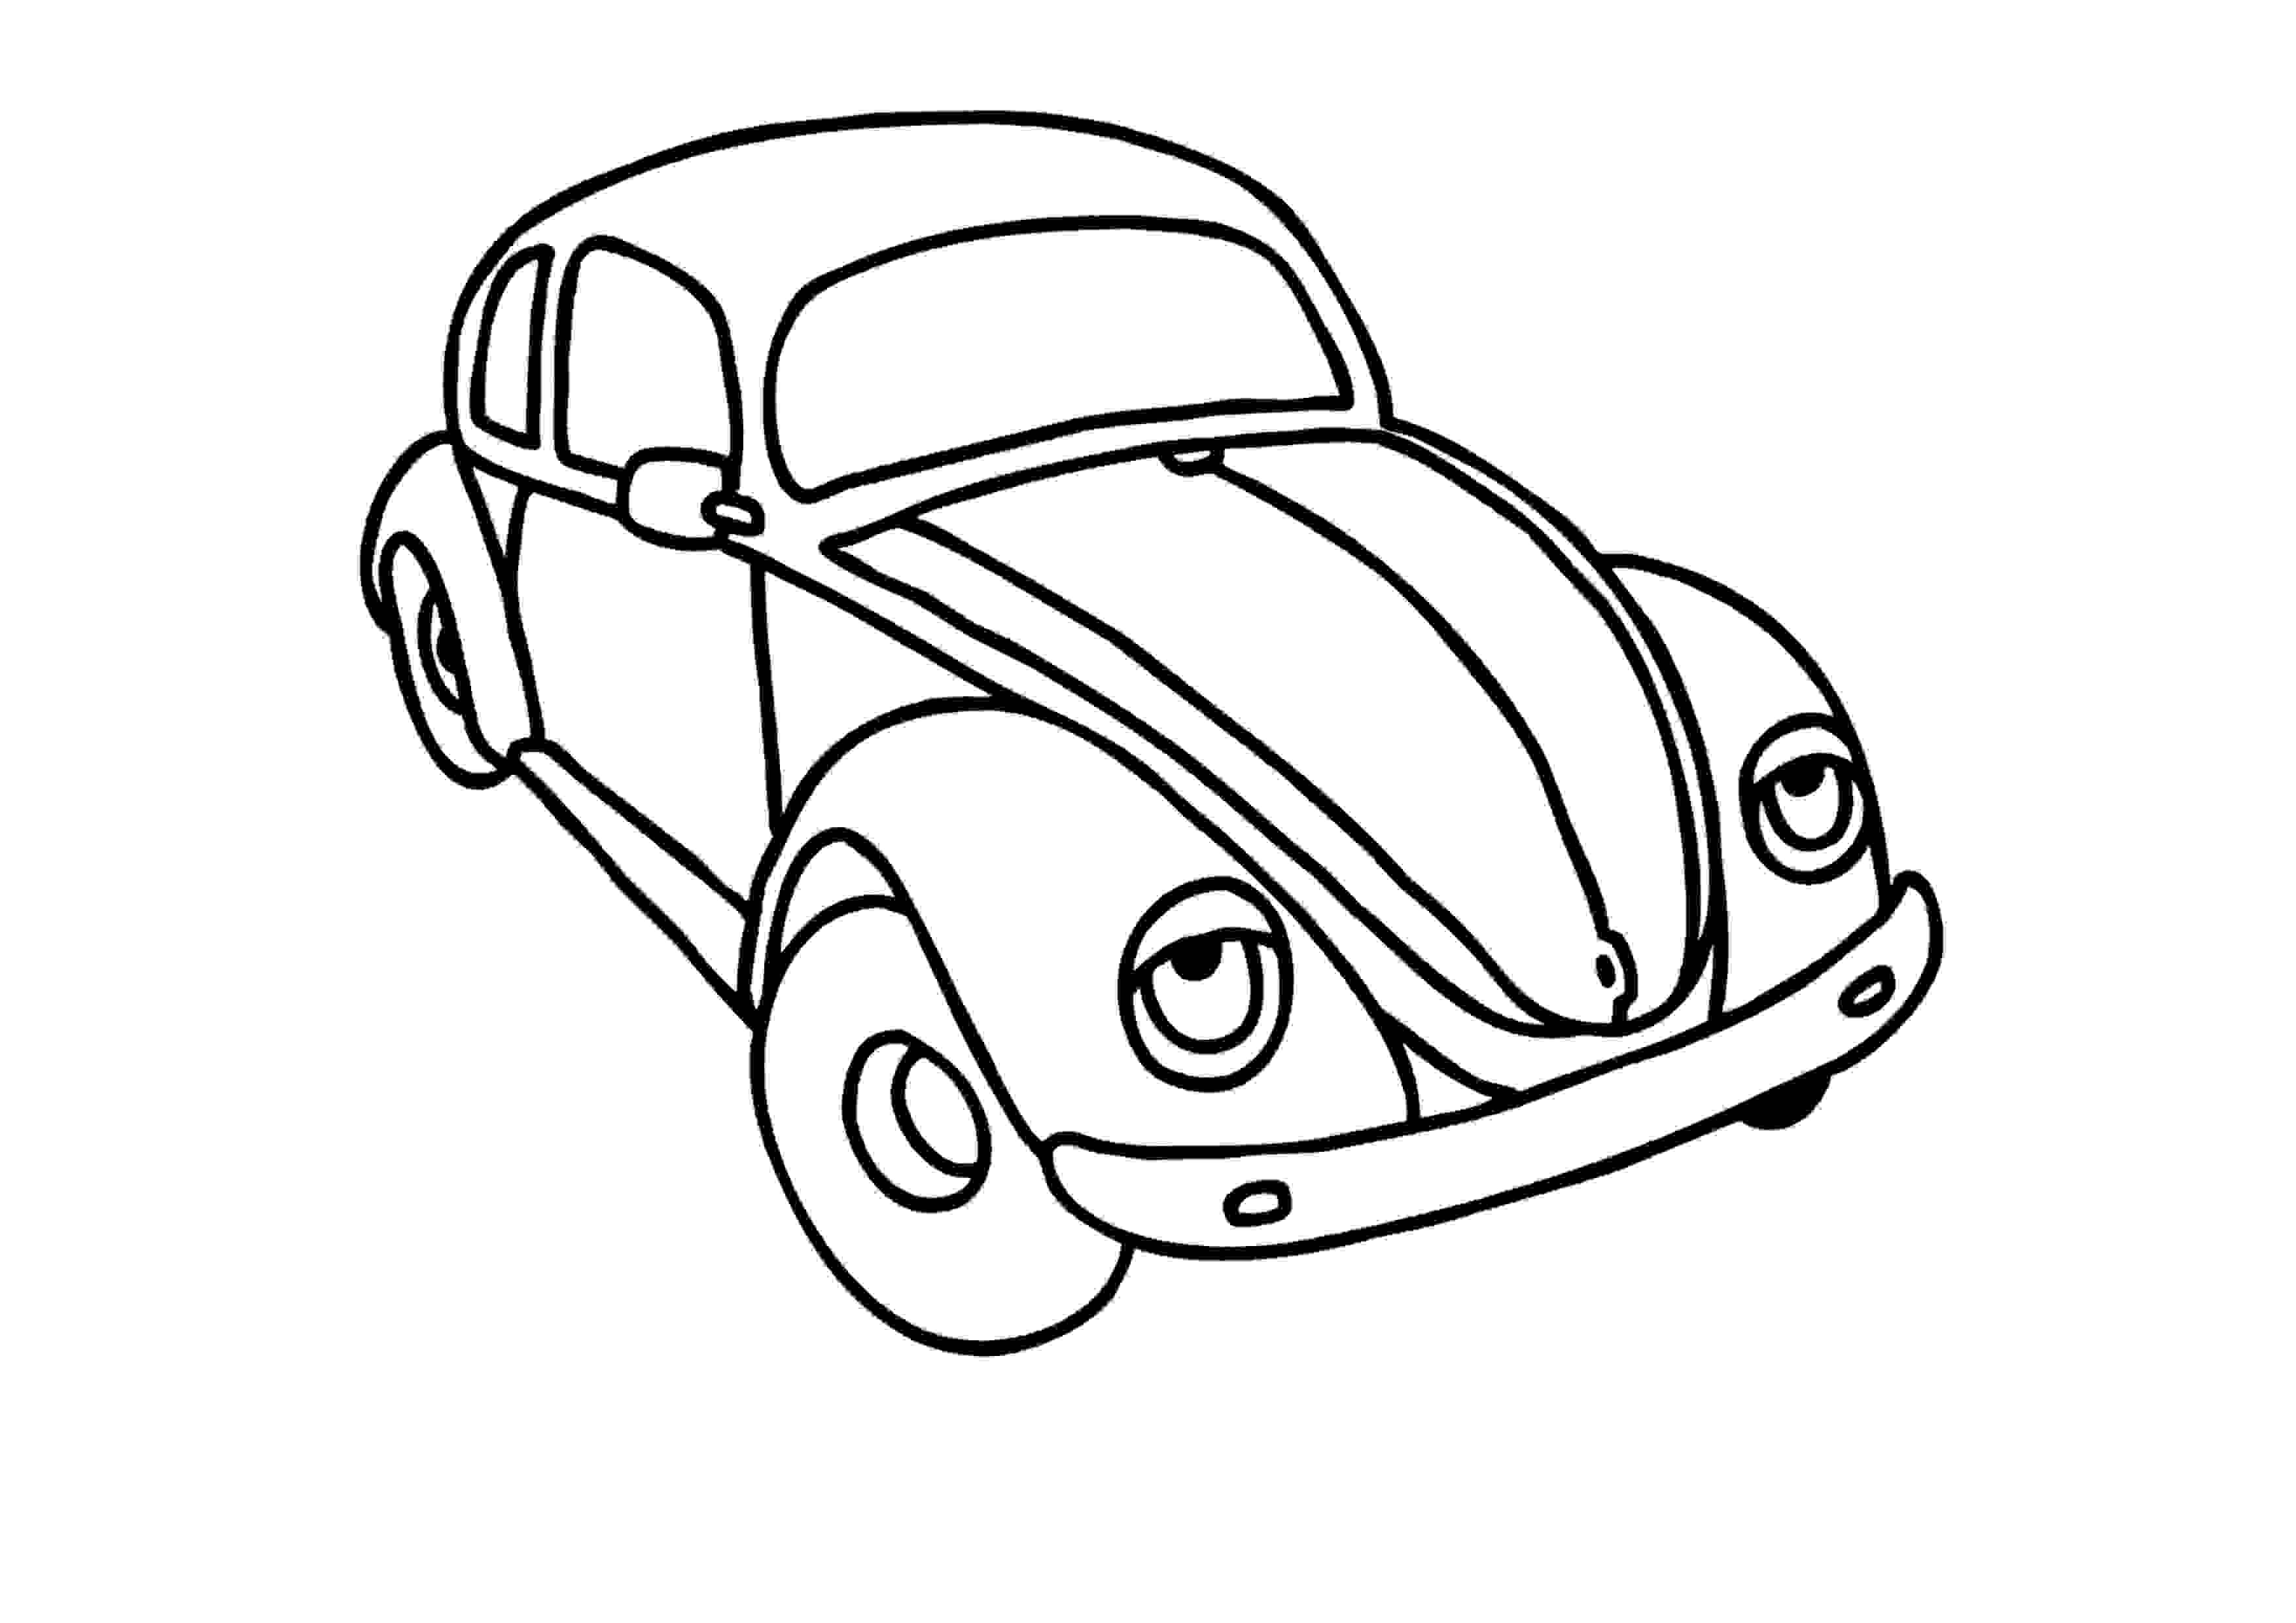 Car coloring page volkswagen beetle